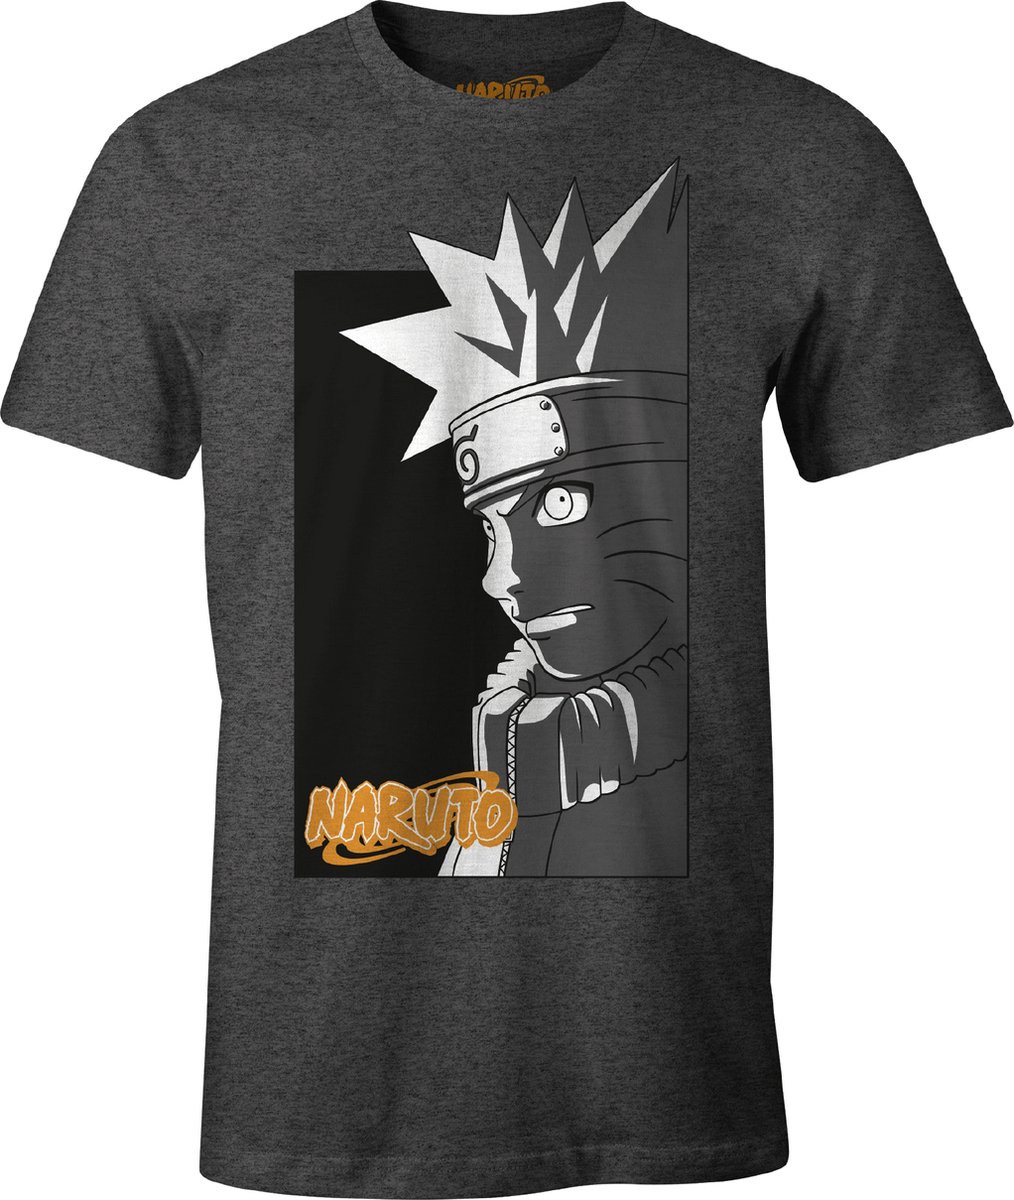 Naruto - Naruto's Schaduw - Antraciet Heren-T-shirt - XL